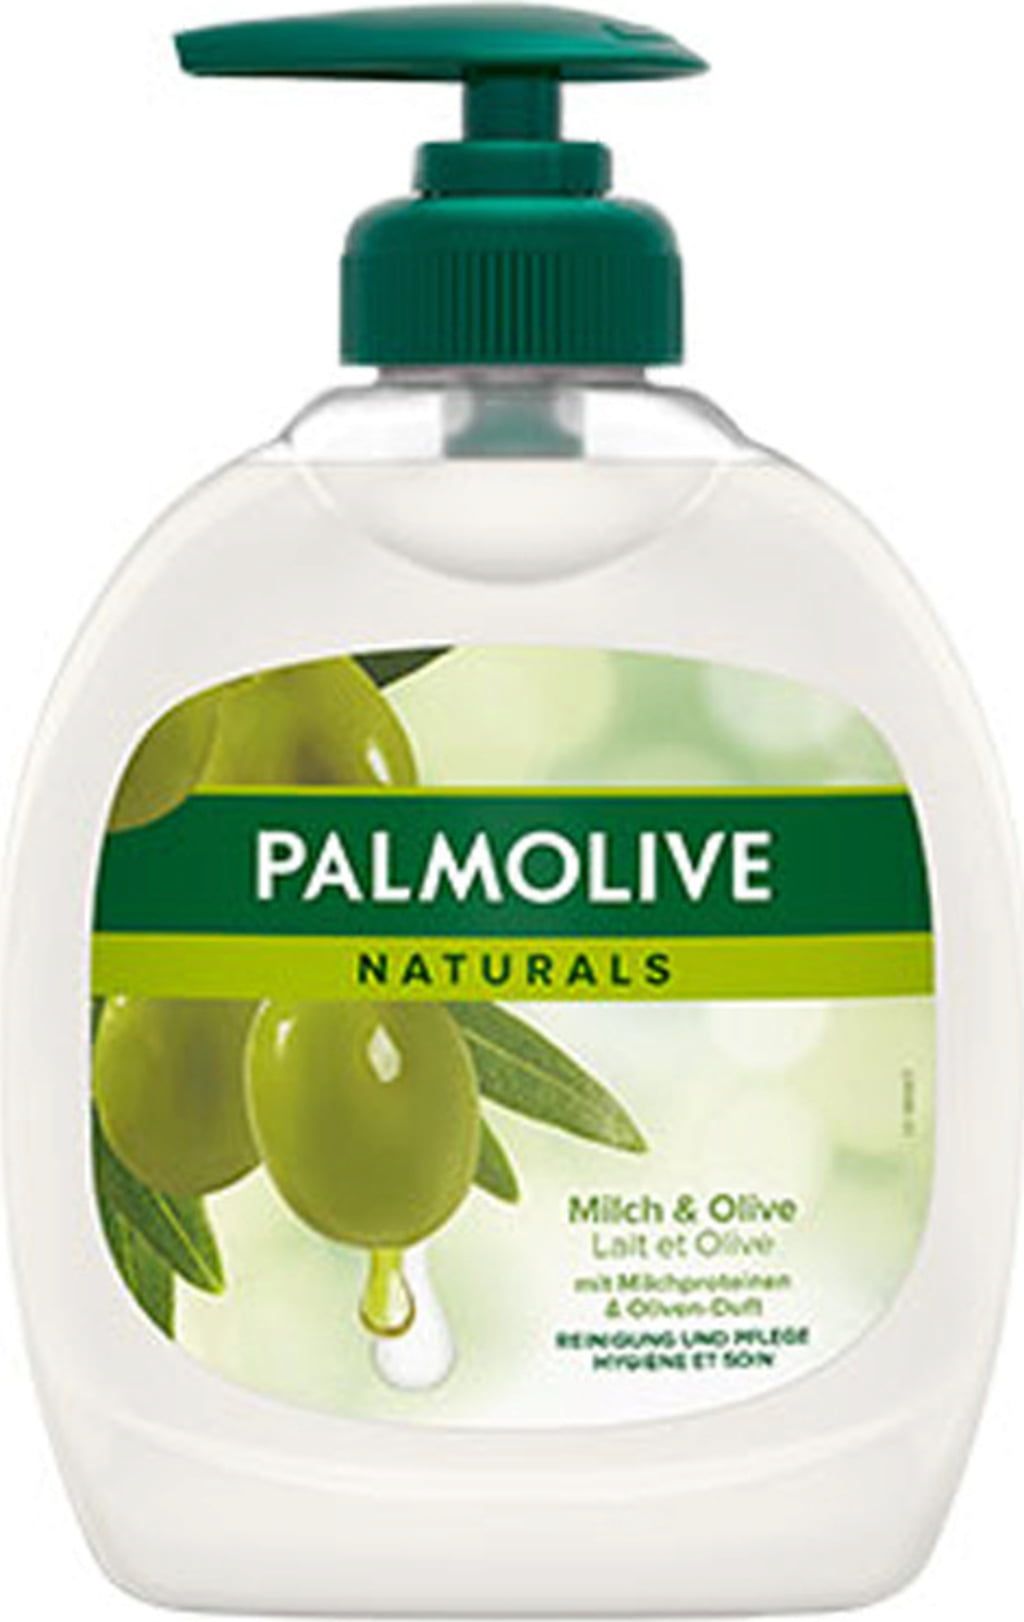 Sabonete Líquido Palmolive Naturals Aloe & Oliva 250ml